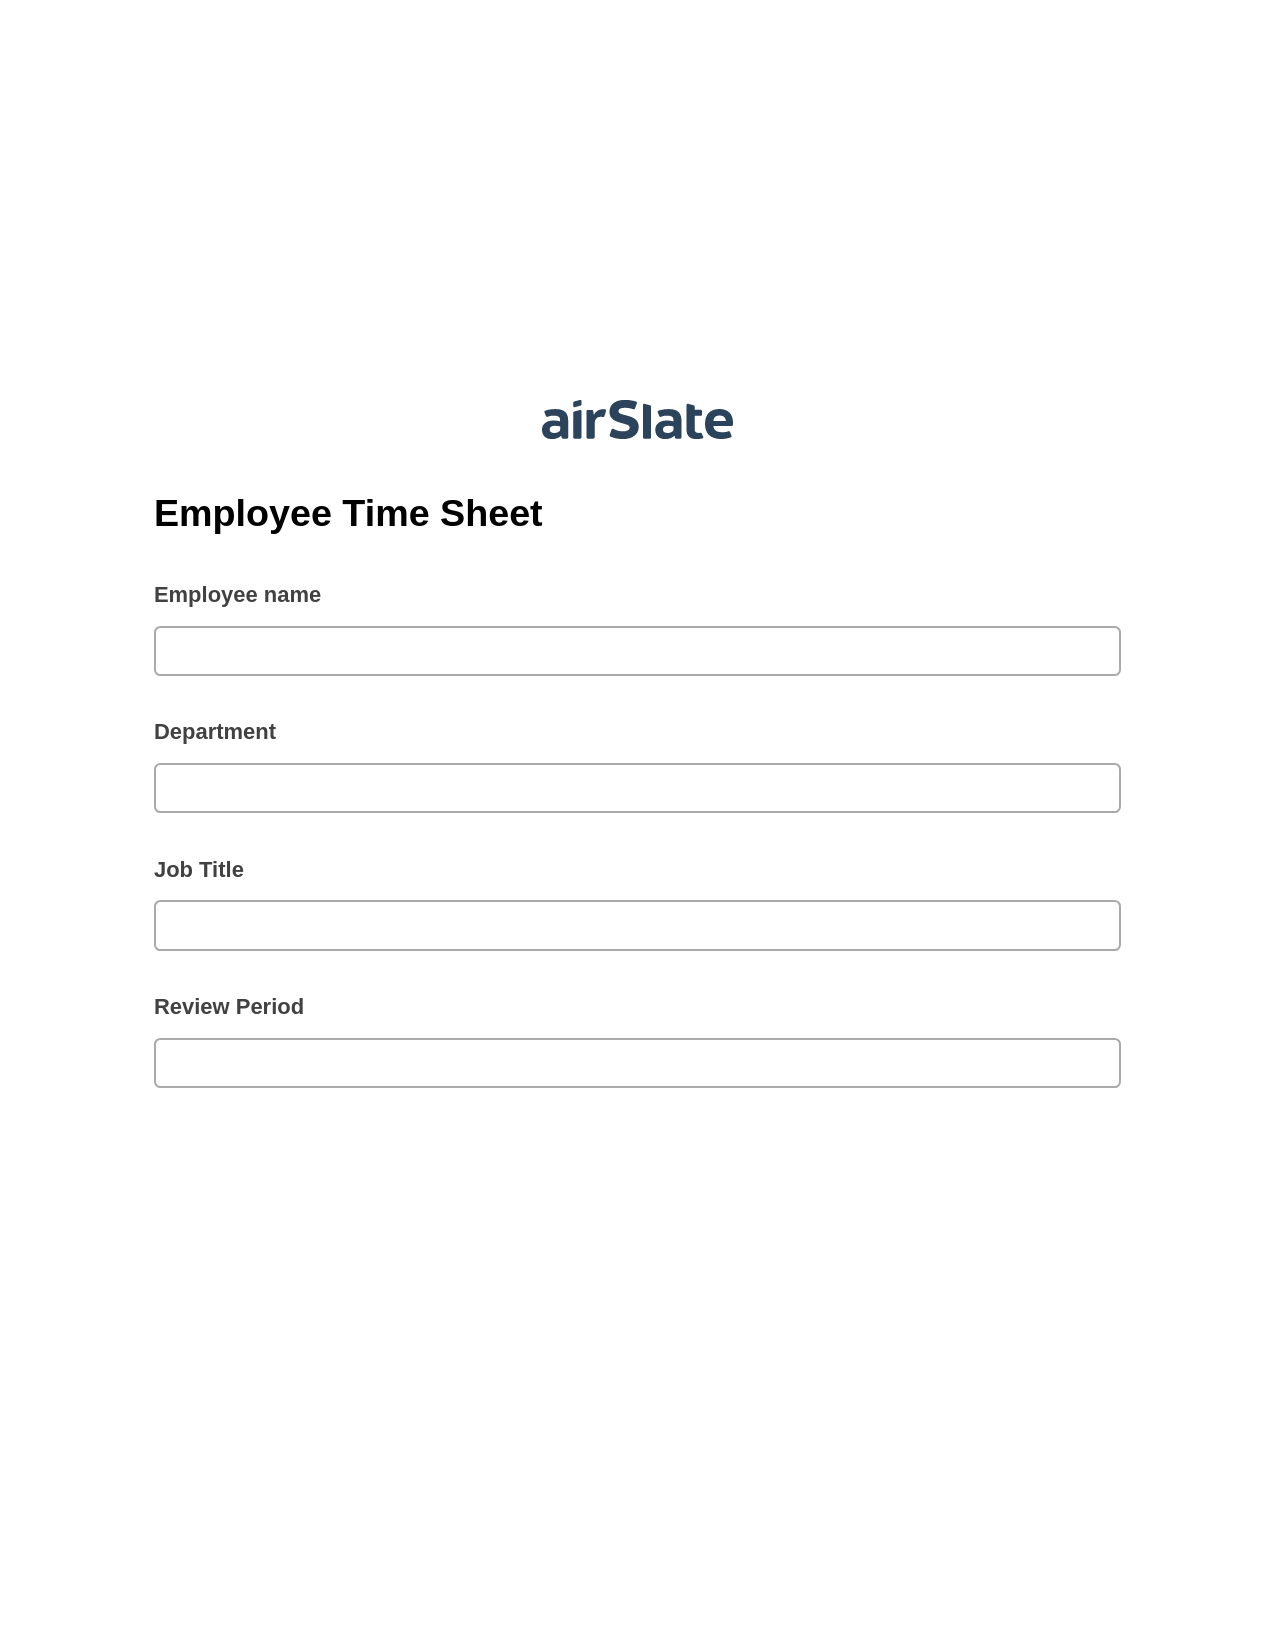 Multirole Employee Time Sheet Pre-fill from Salesforce Records Bot, Update Audit Trail Bot, Slack Notification Postfinish Bot